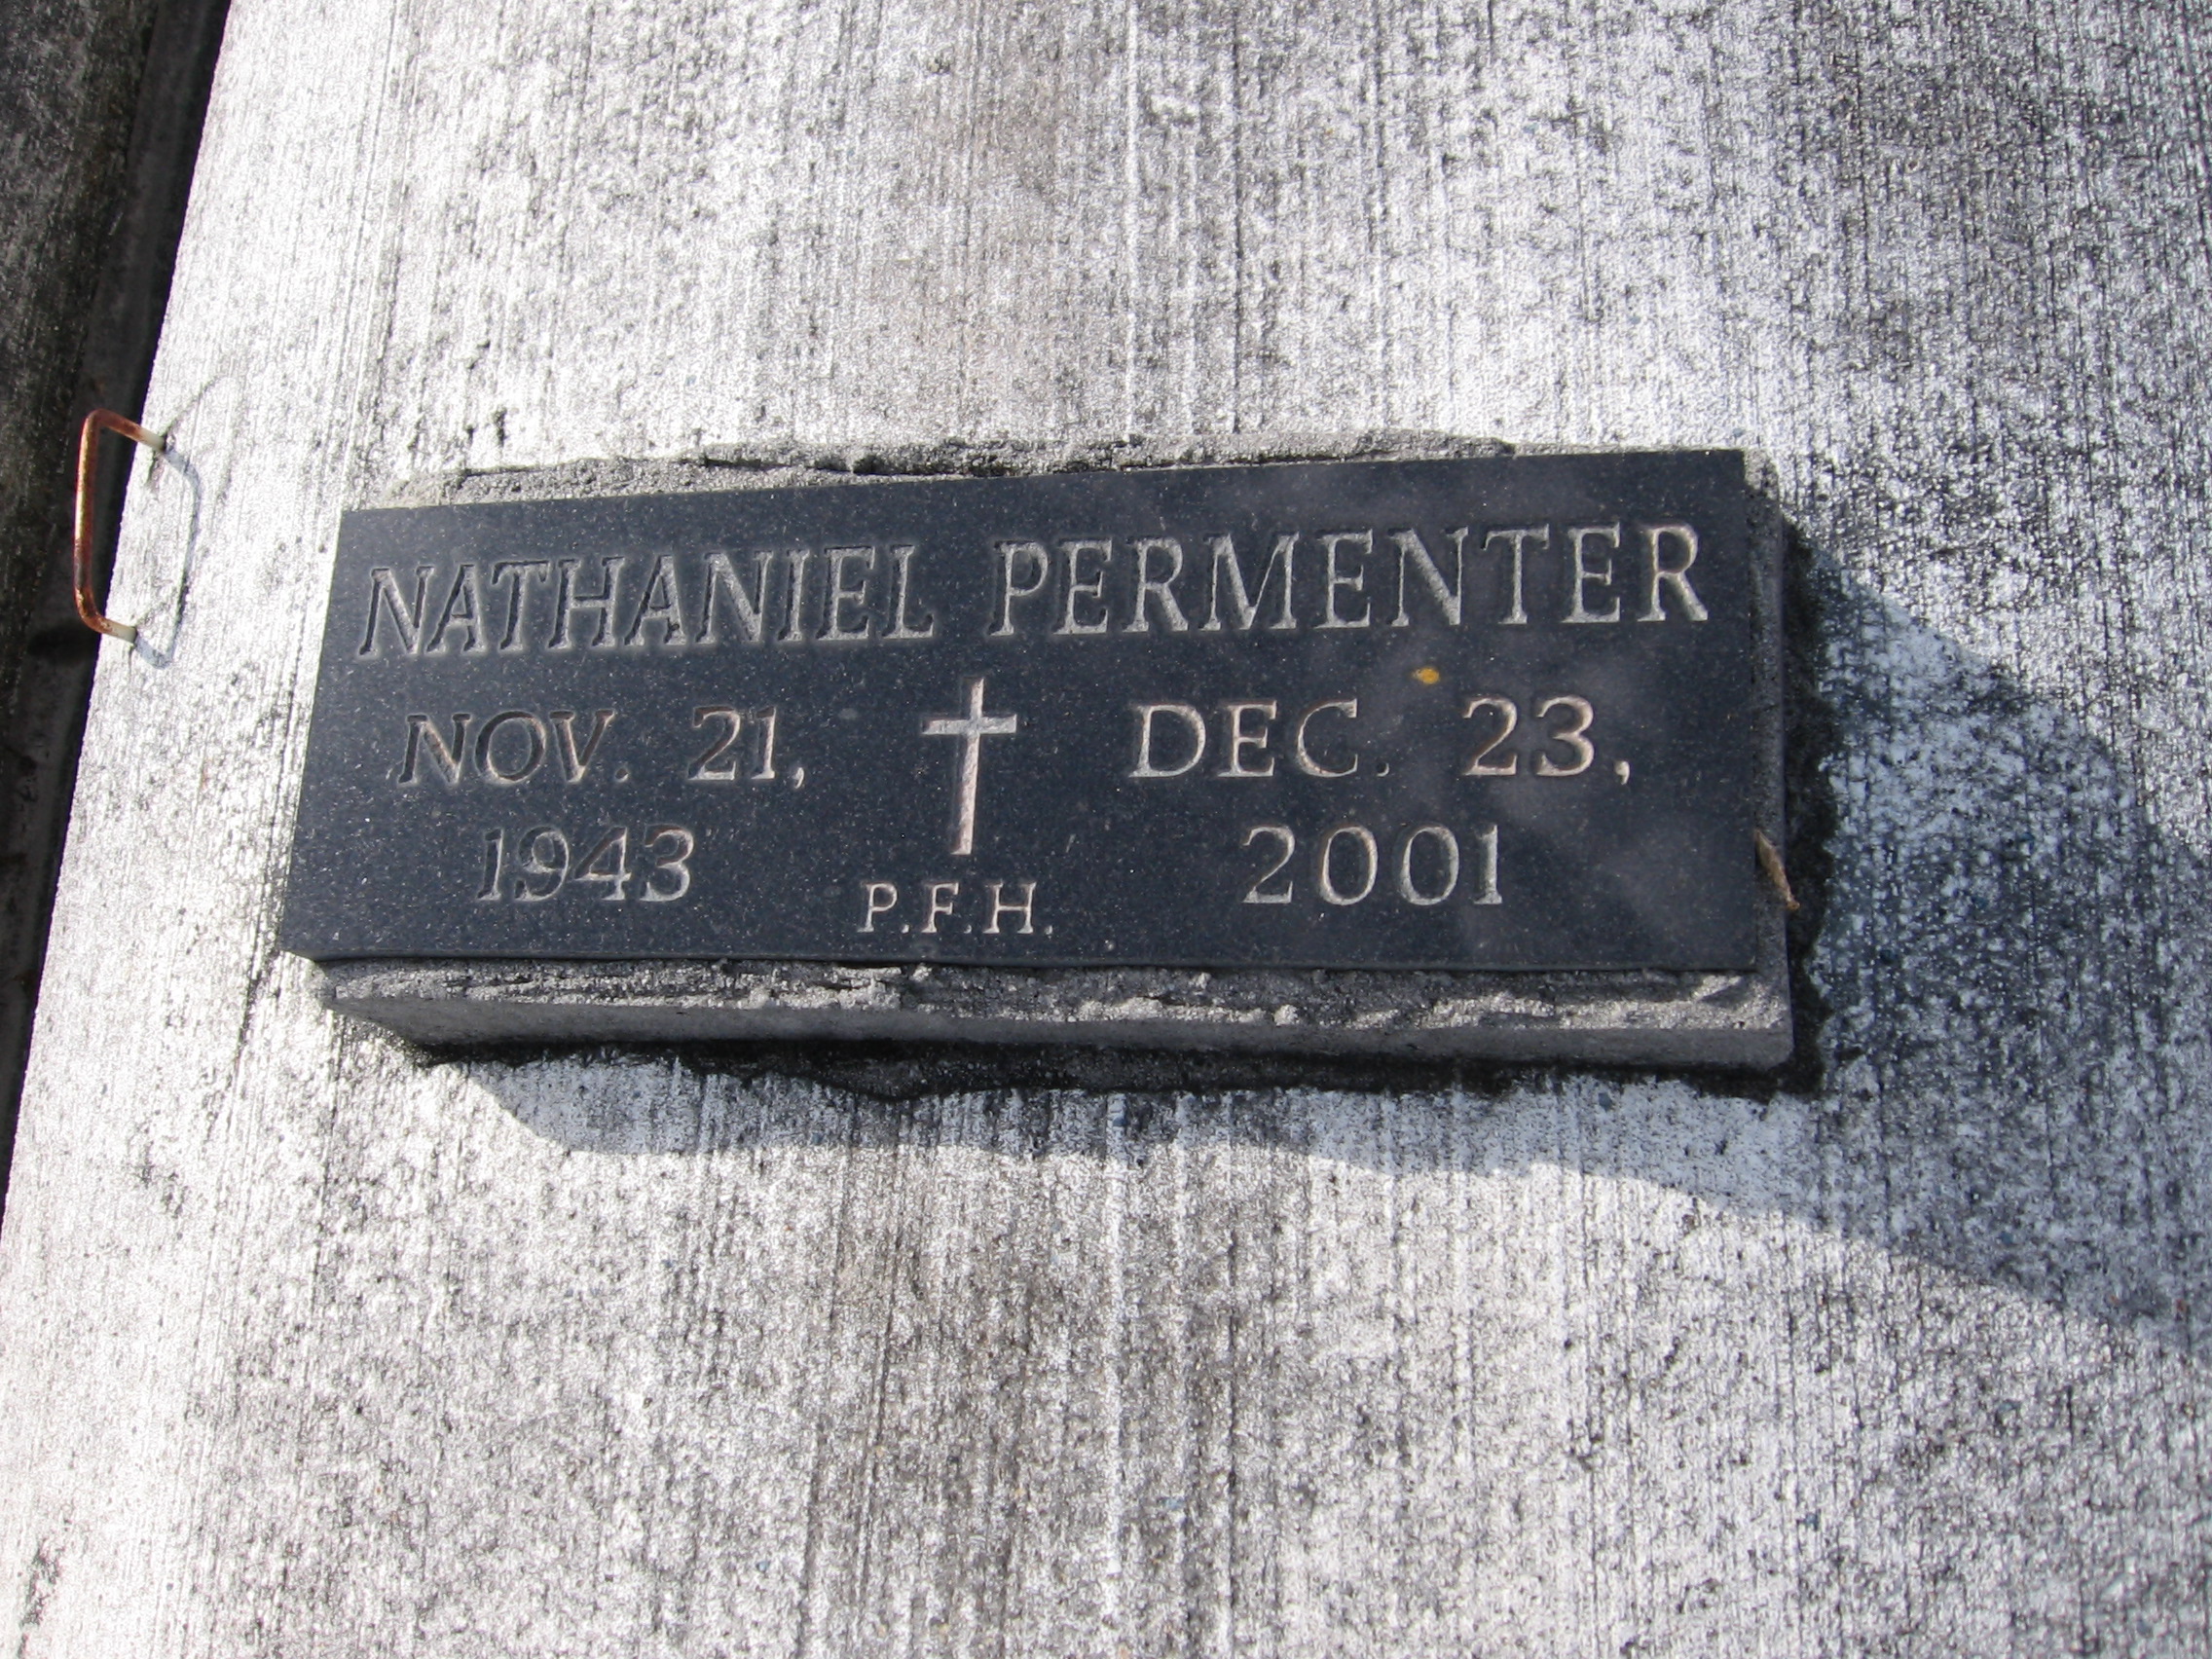 Nathaniel Permenter